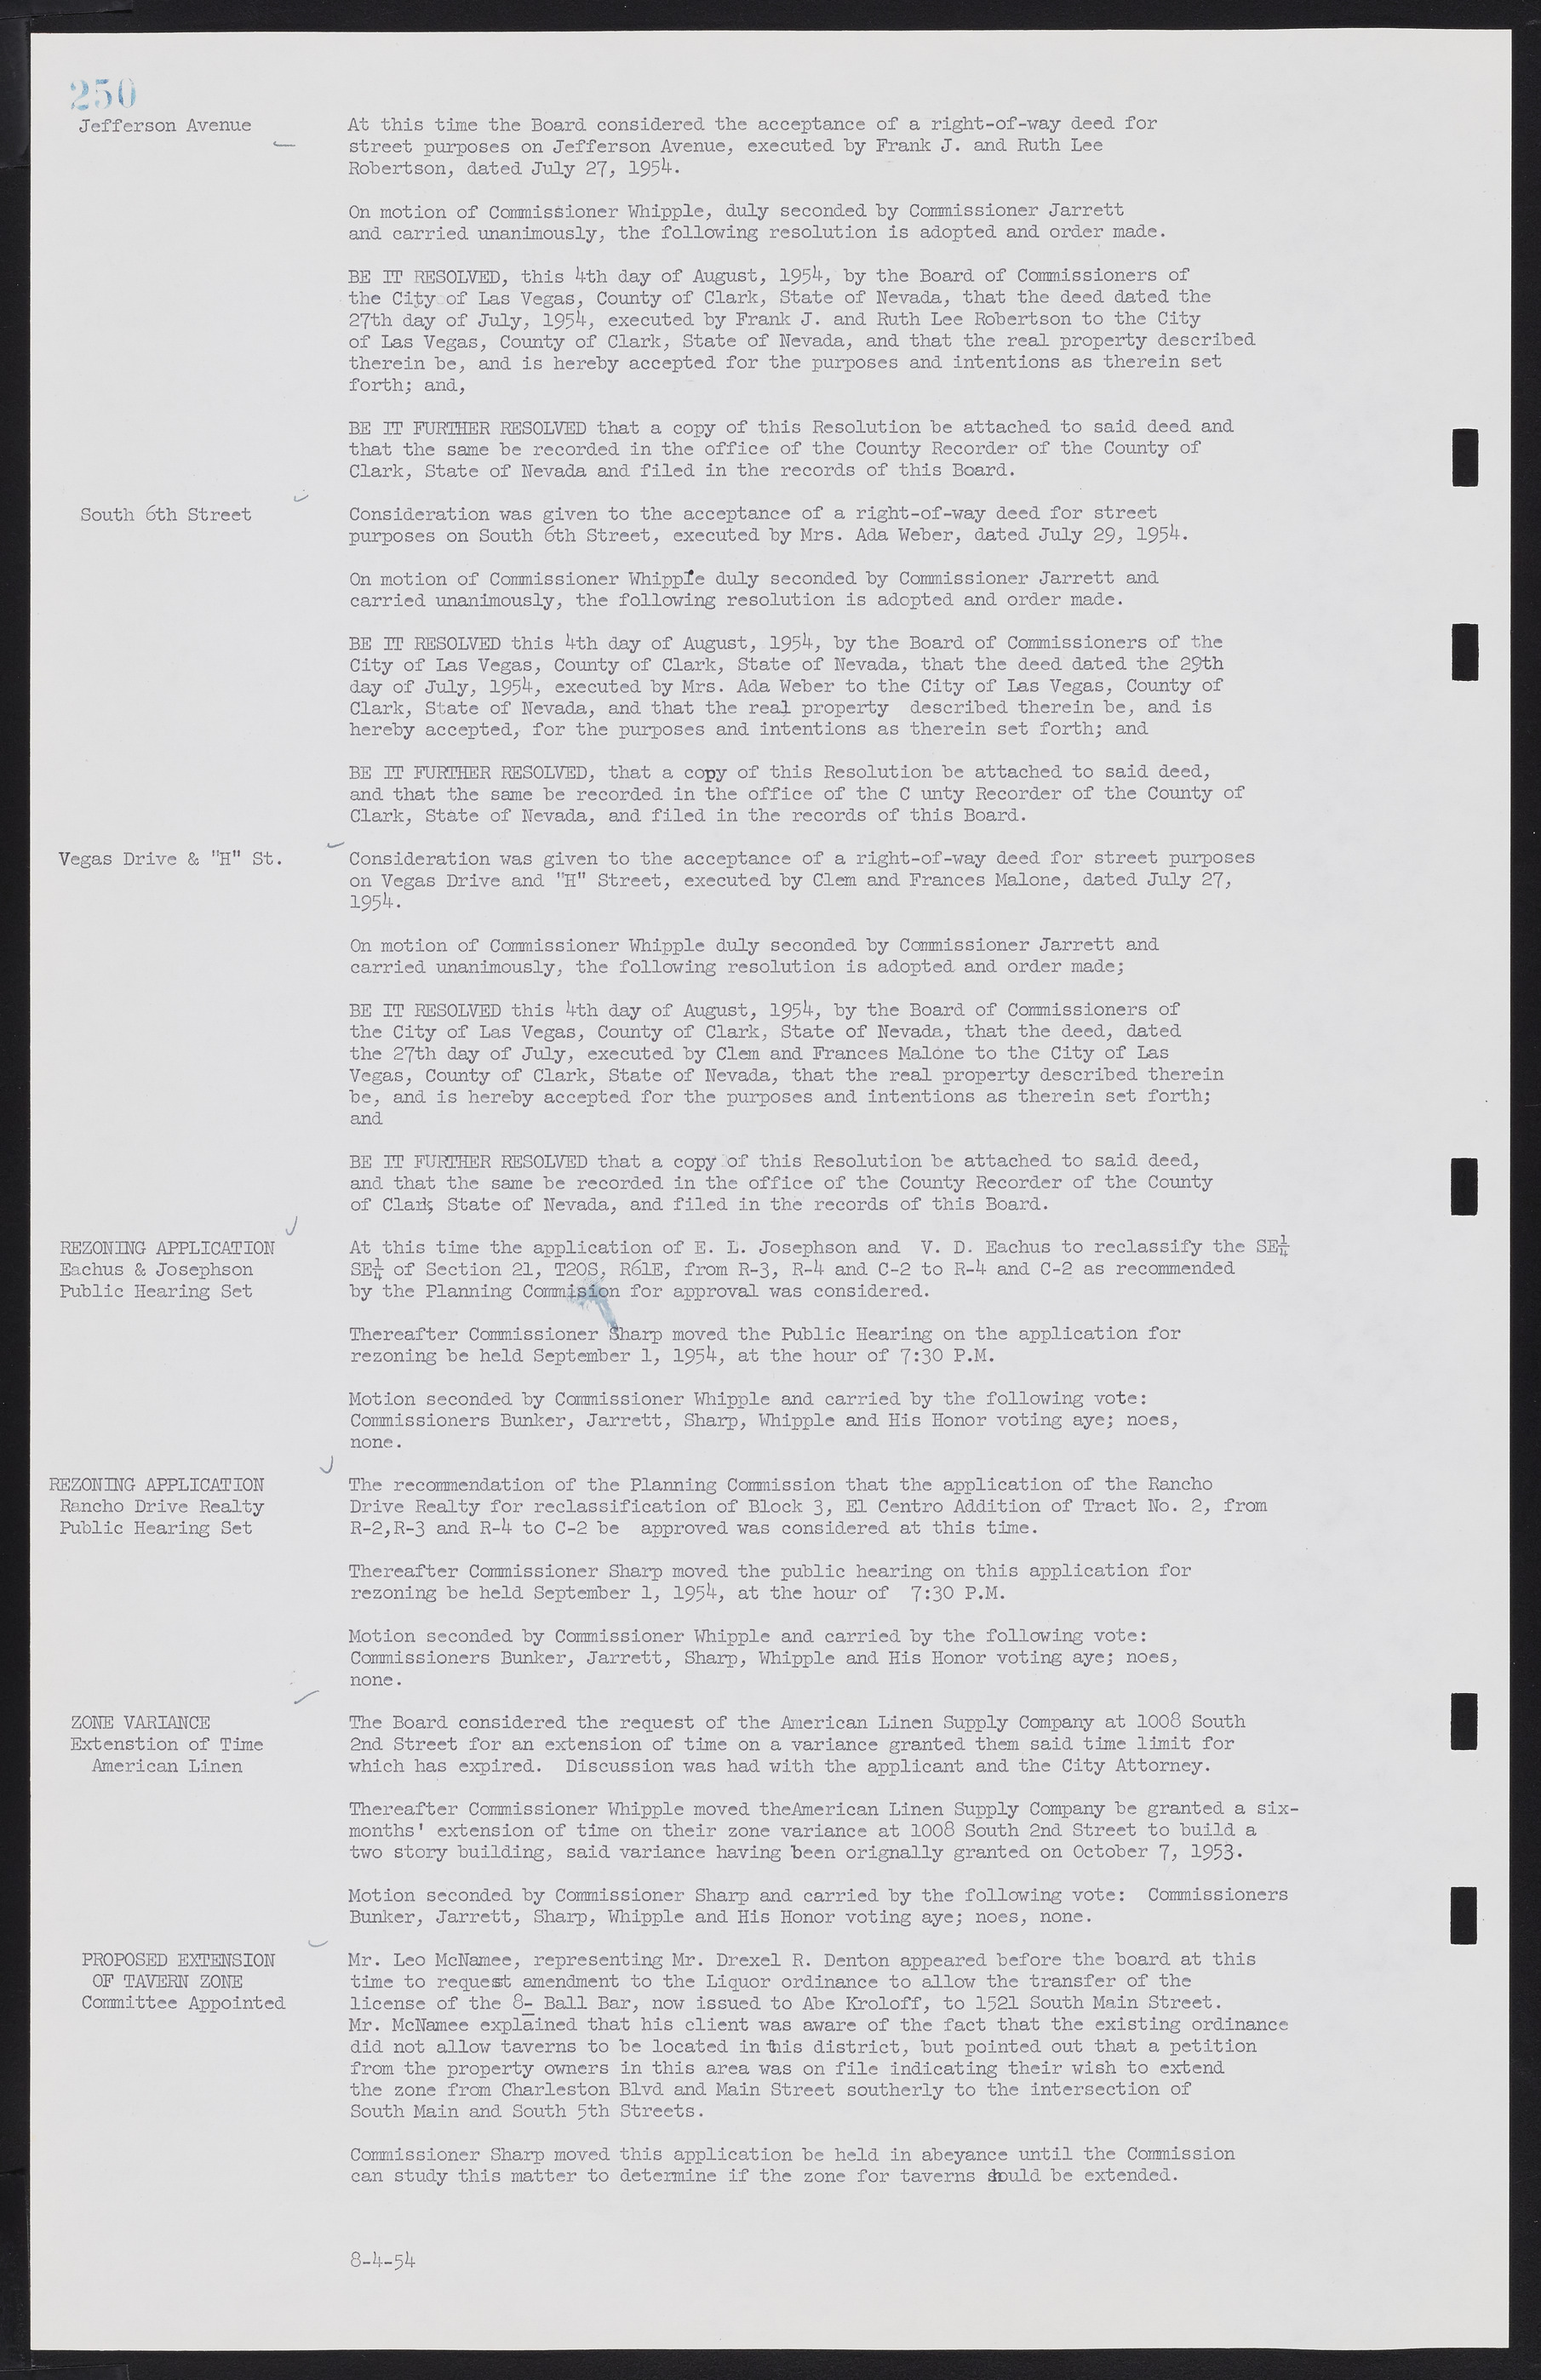 Las Vegas City Commission Minutes, February 17, 1954 to September 21, 1955, lvc000009-256